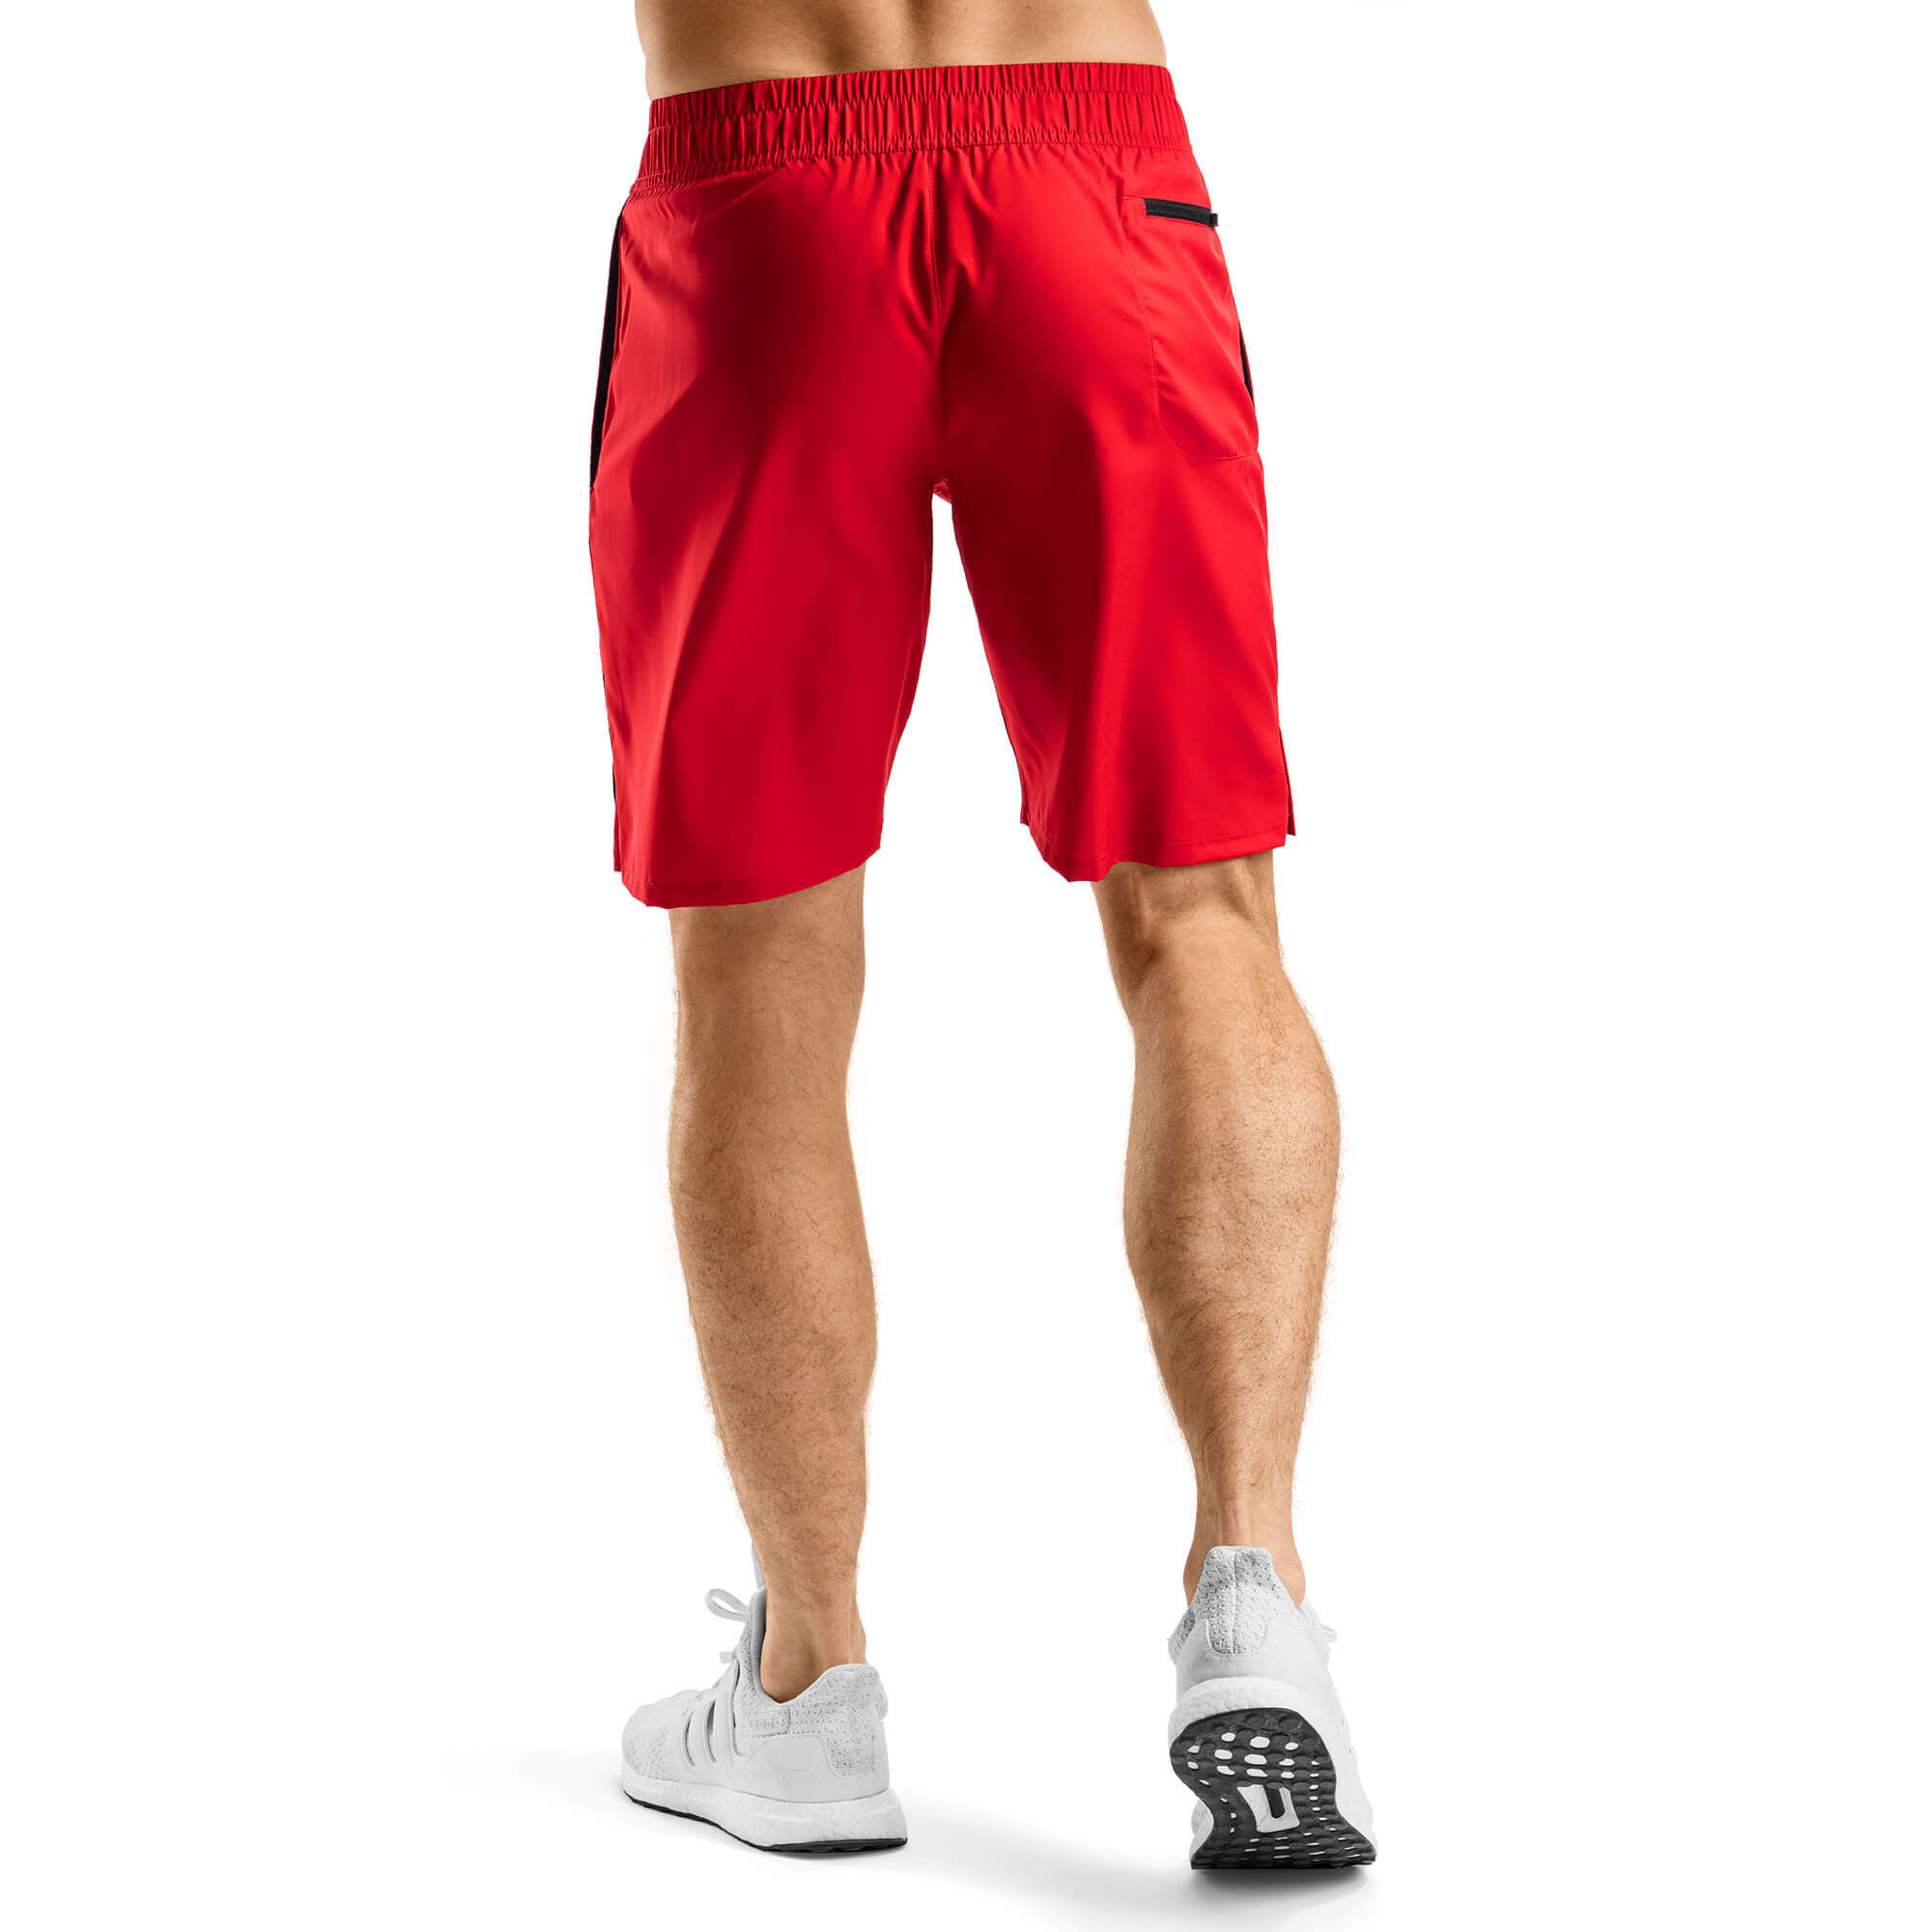 Zenith Shorts 9" – Red